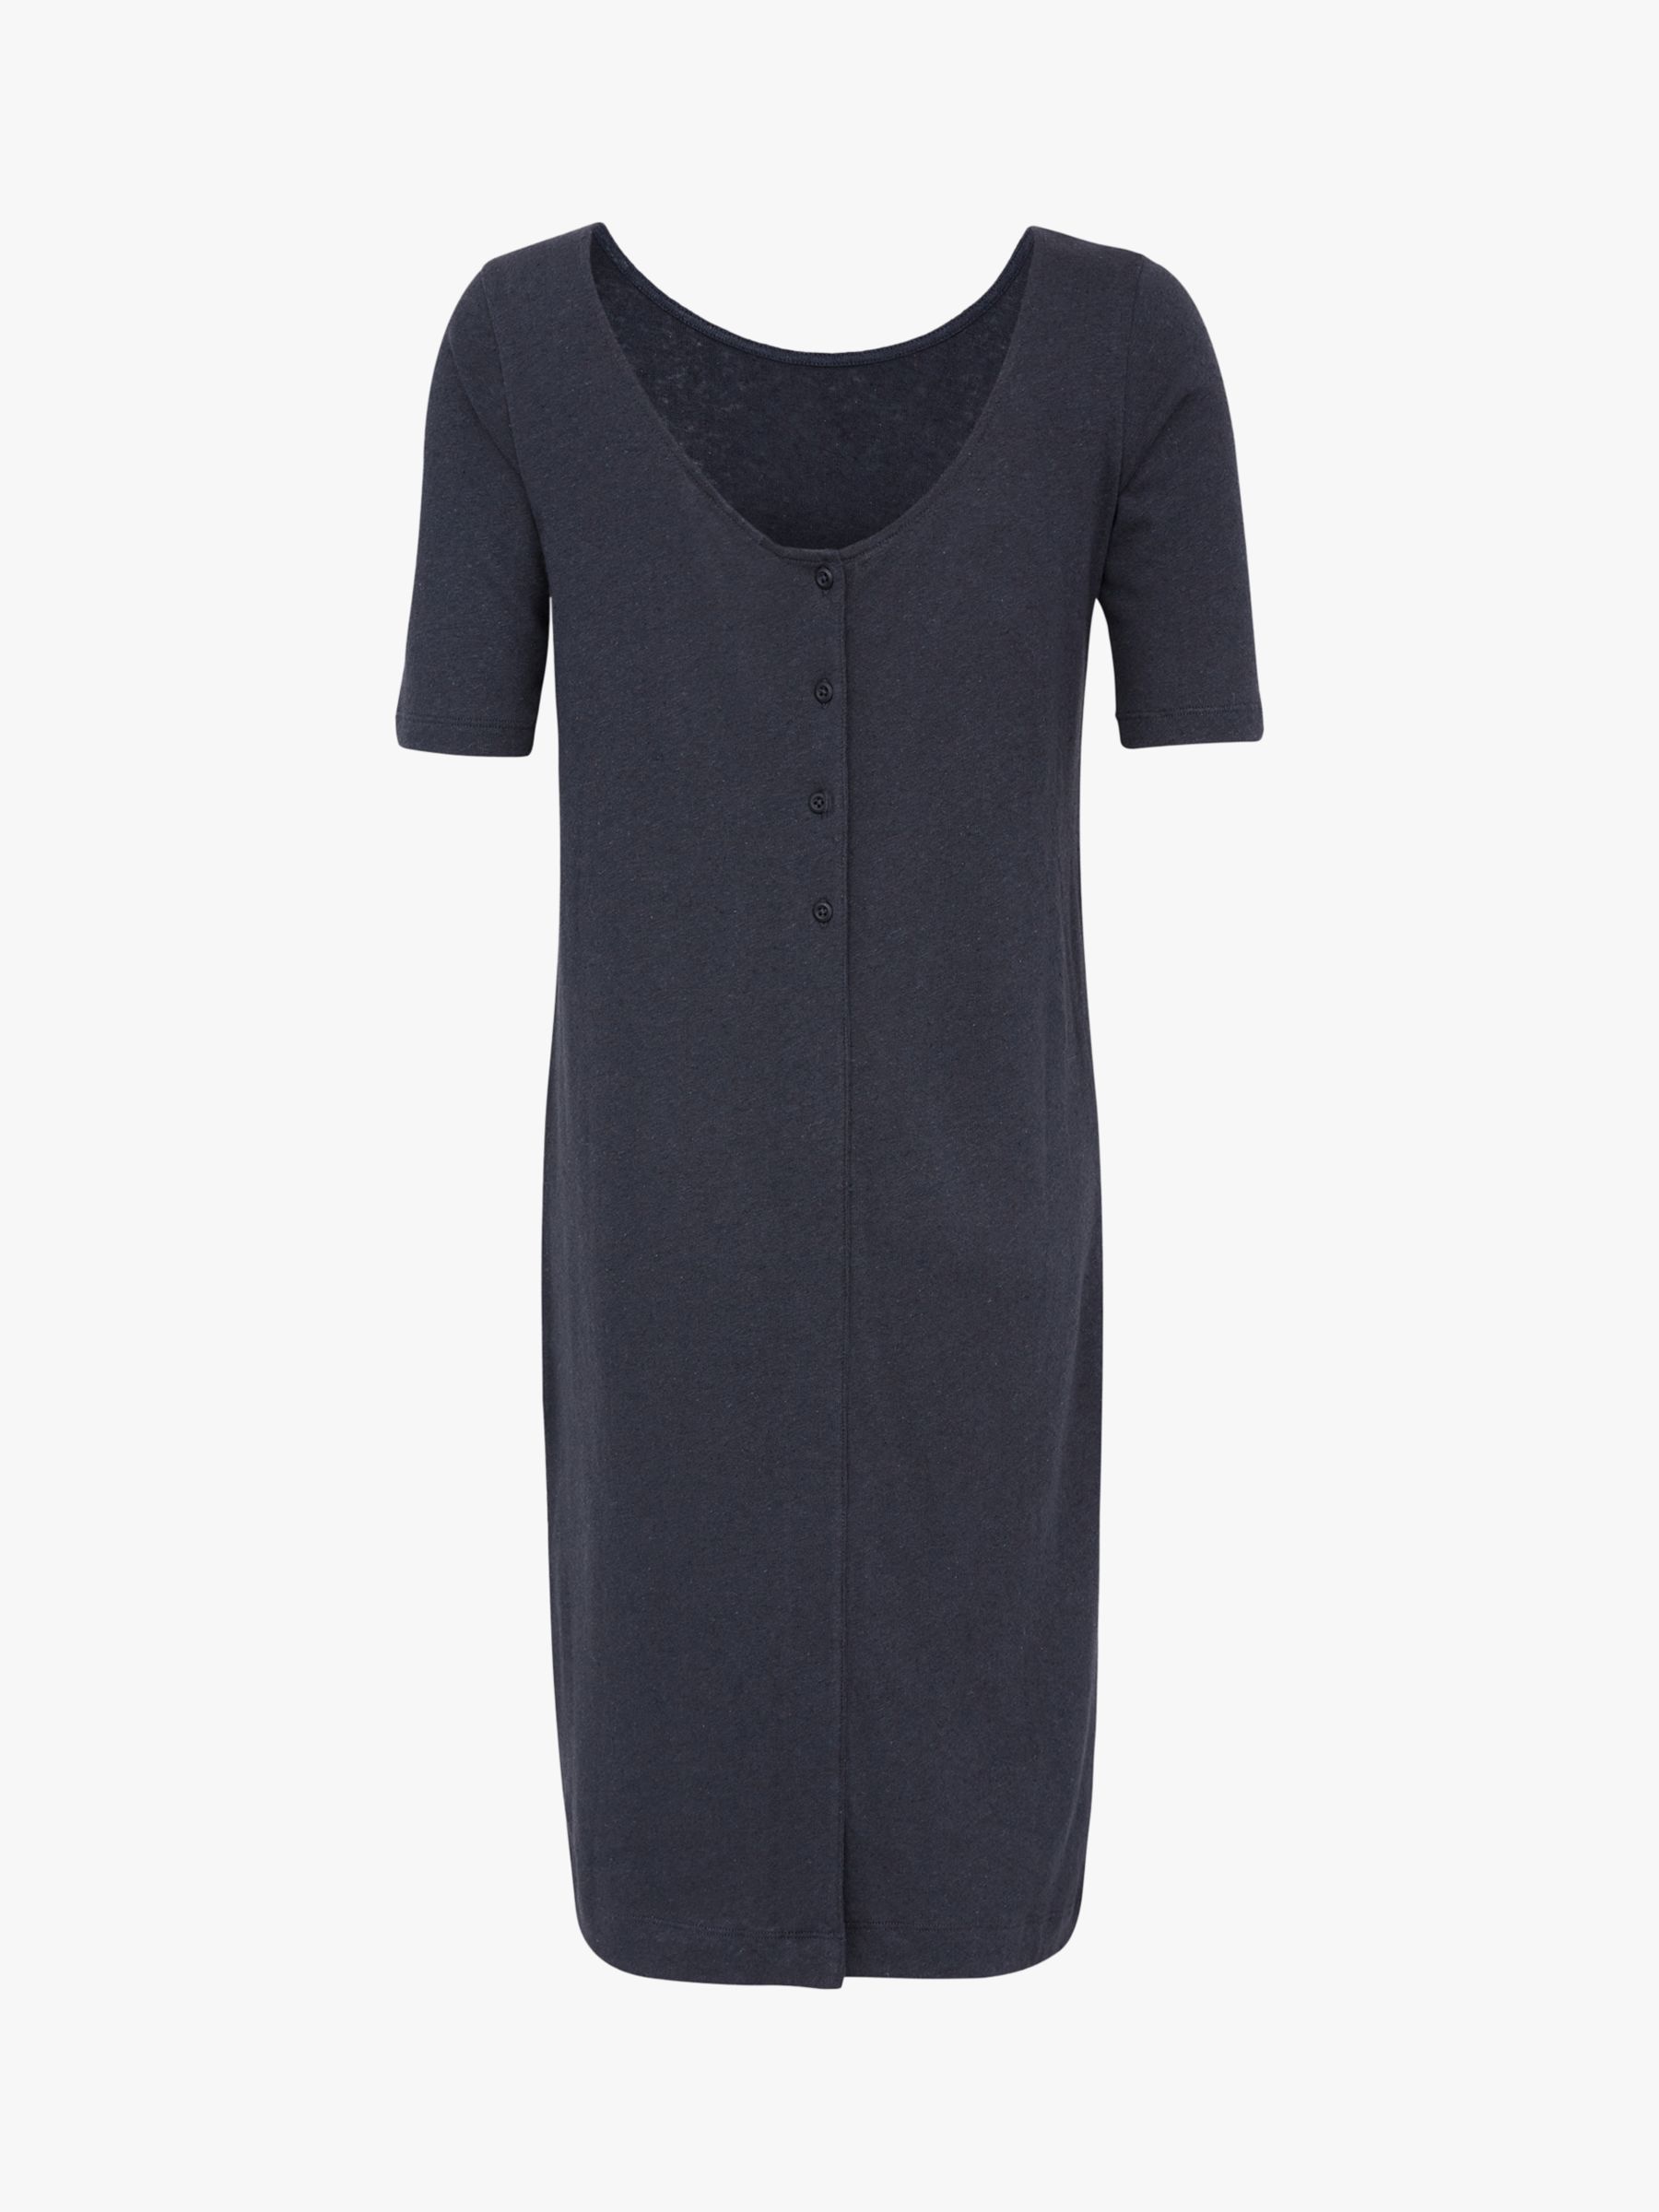 Celtic & Co. Button Back Linen Blend Knee Length Dress, Navy, 8